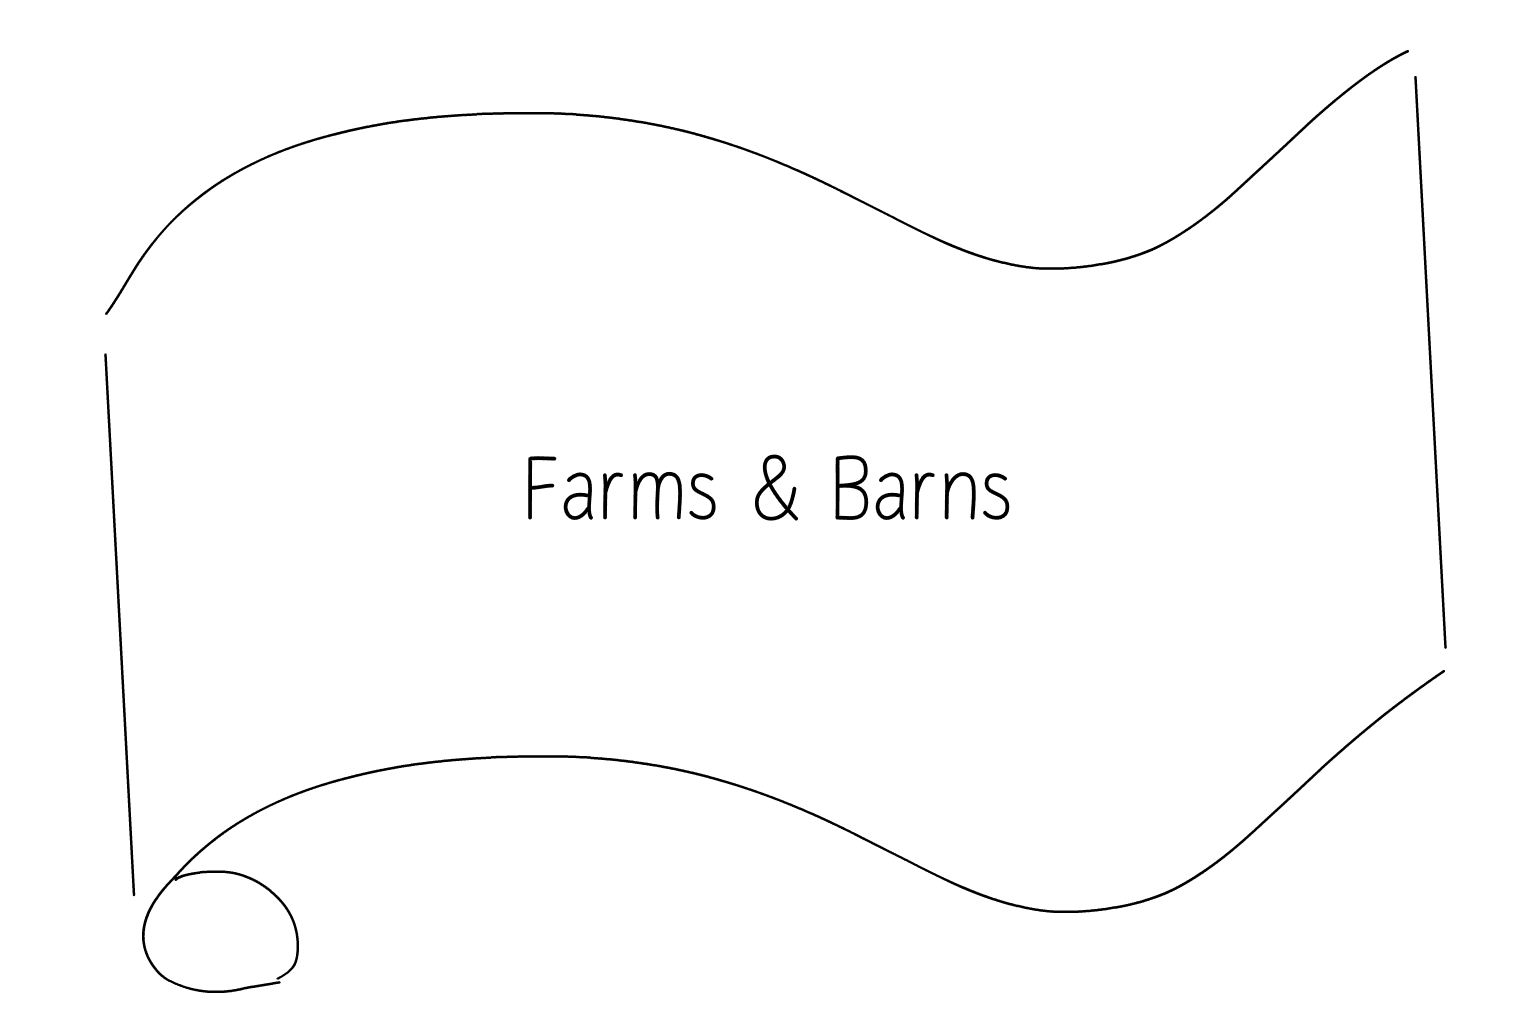 Illustration of wedding farms and barns